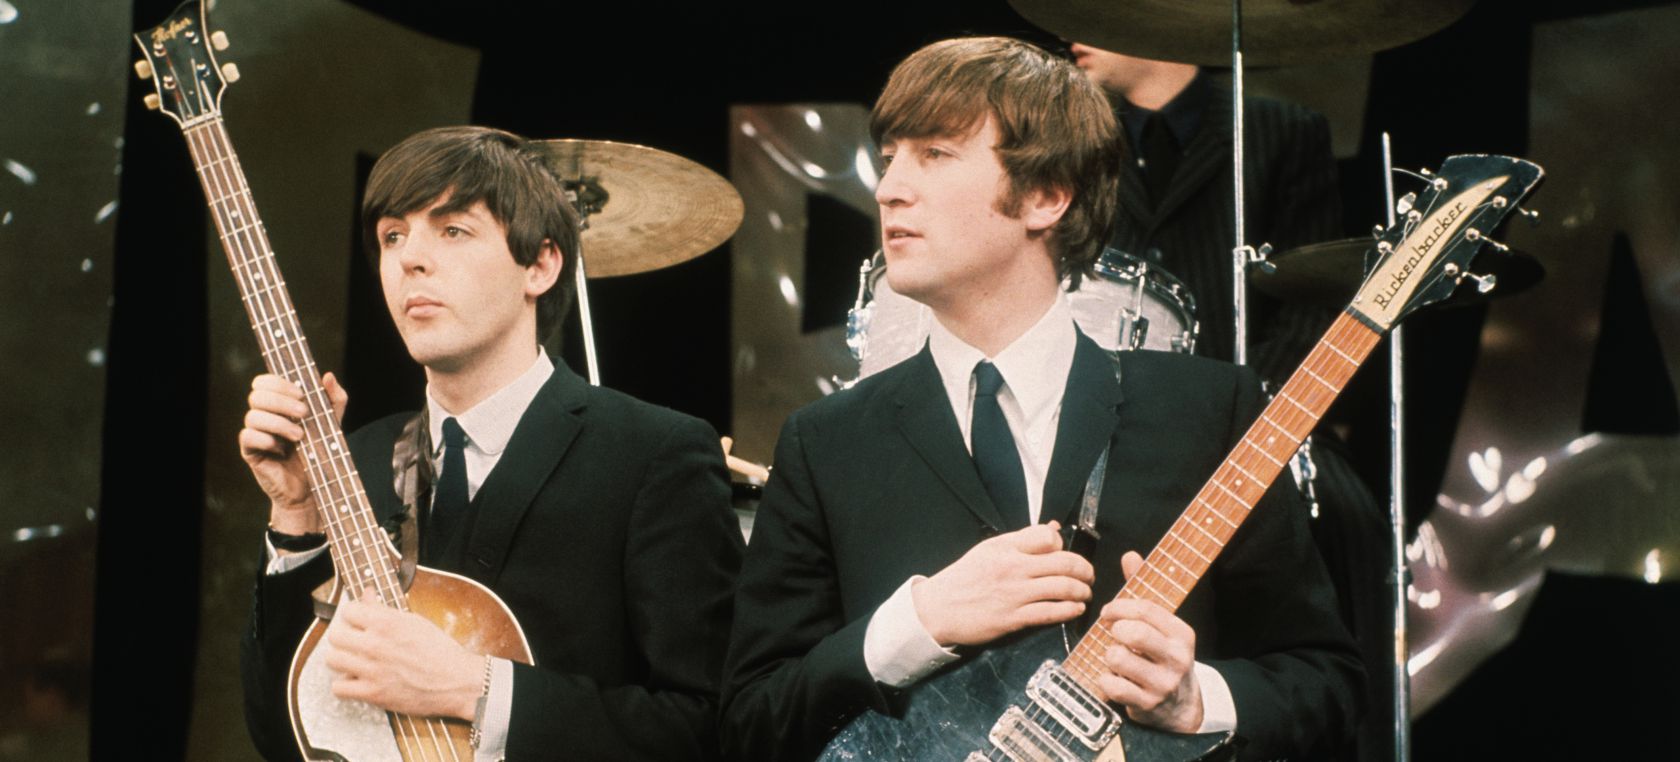 La carta destructiva que John Lennon le envió a Paul McCartney sorprende a los fans de The Beatles